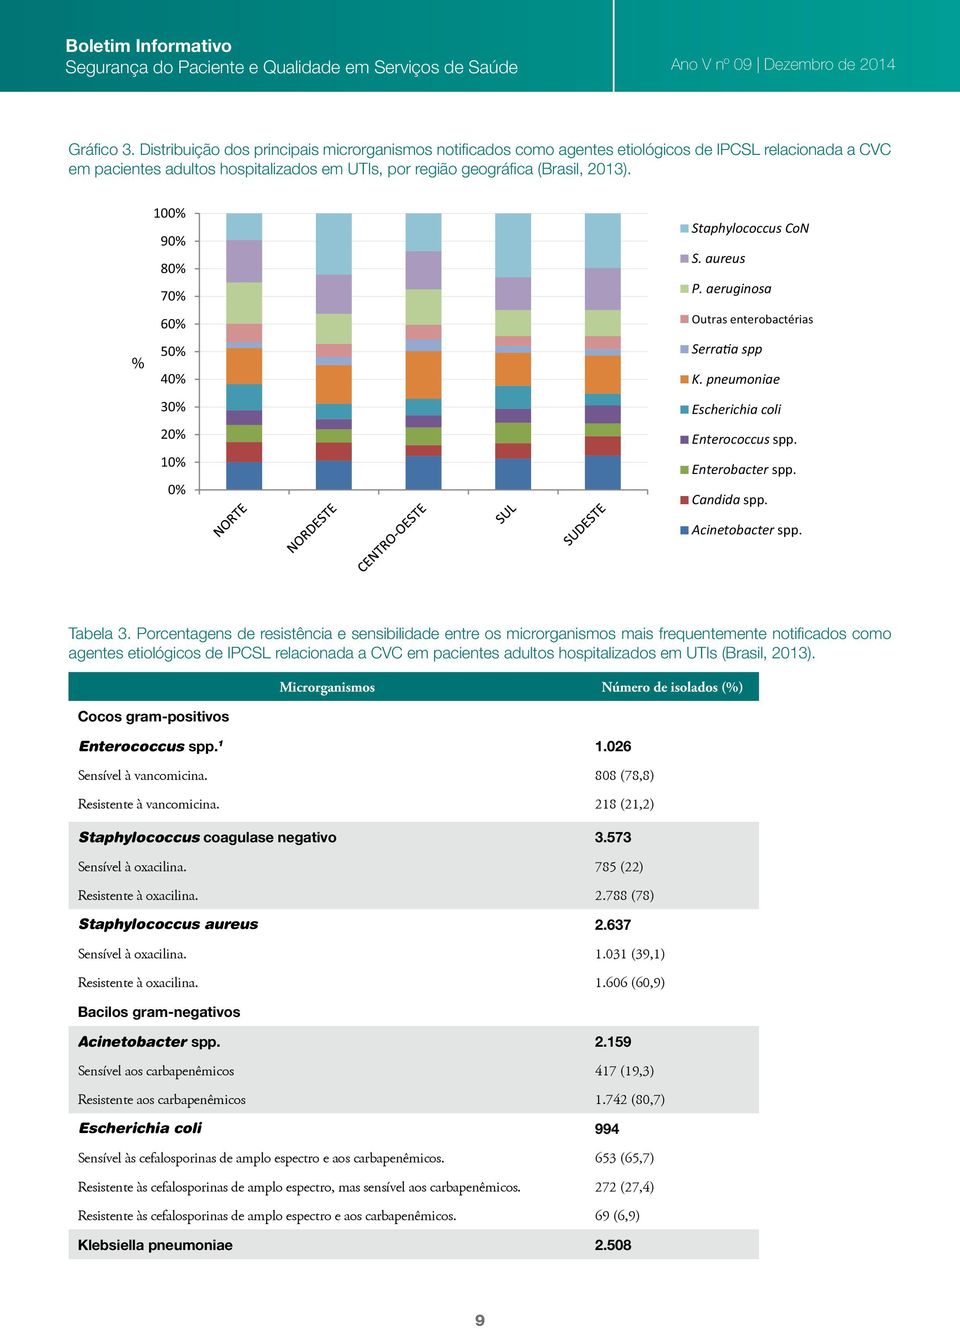 Candida spp. Acinetobacter spp. Tabela 3.